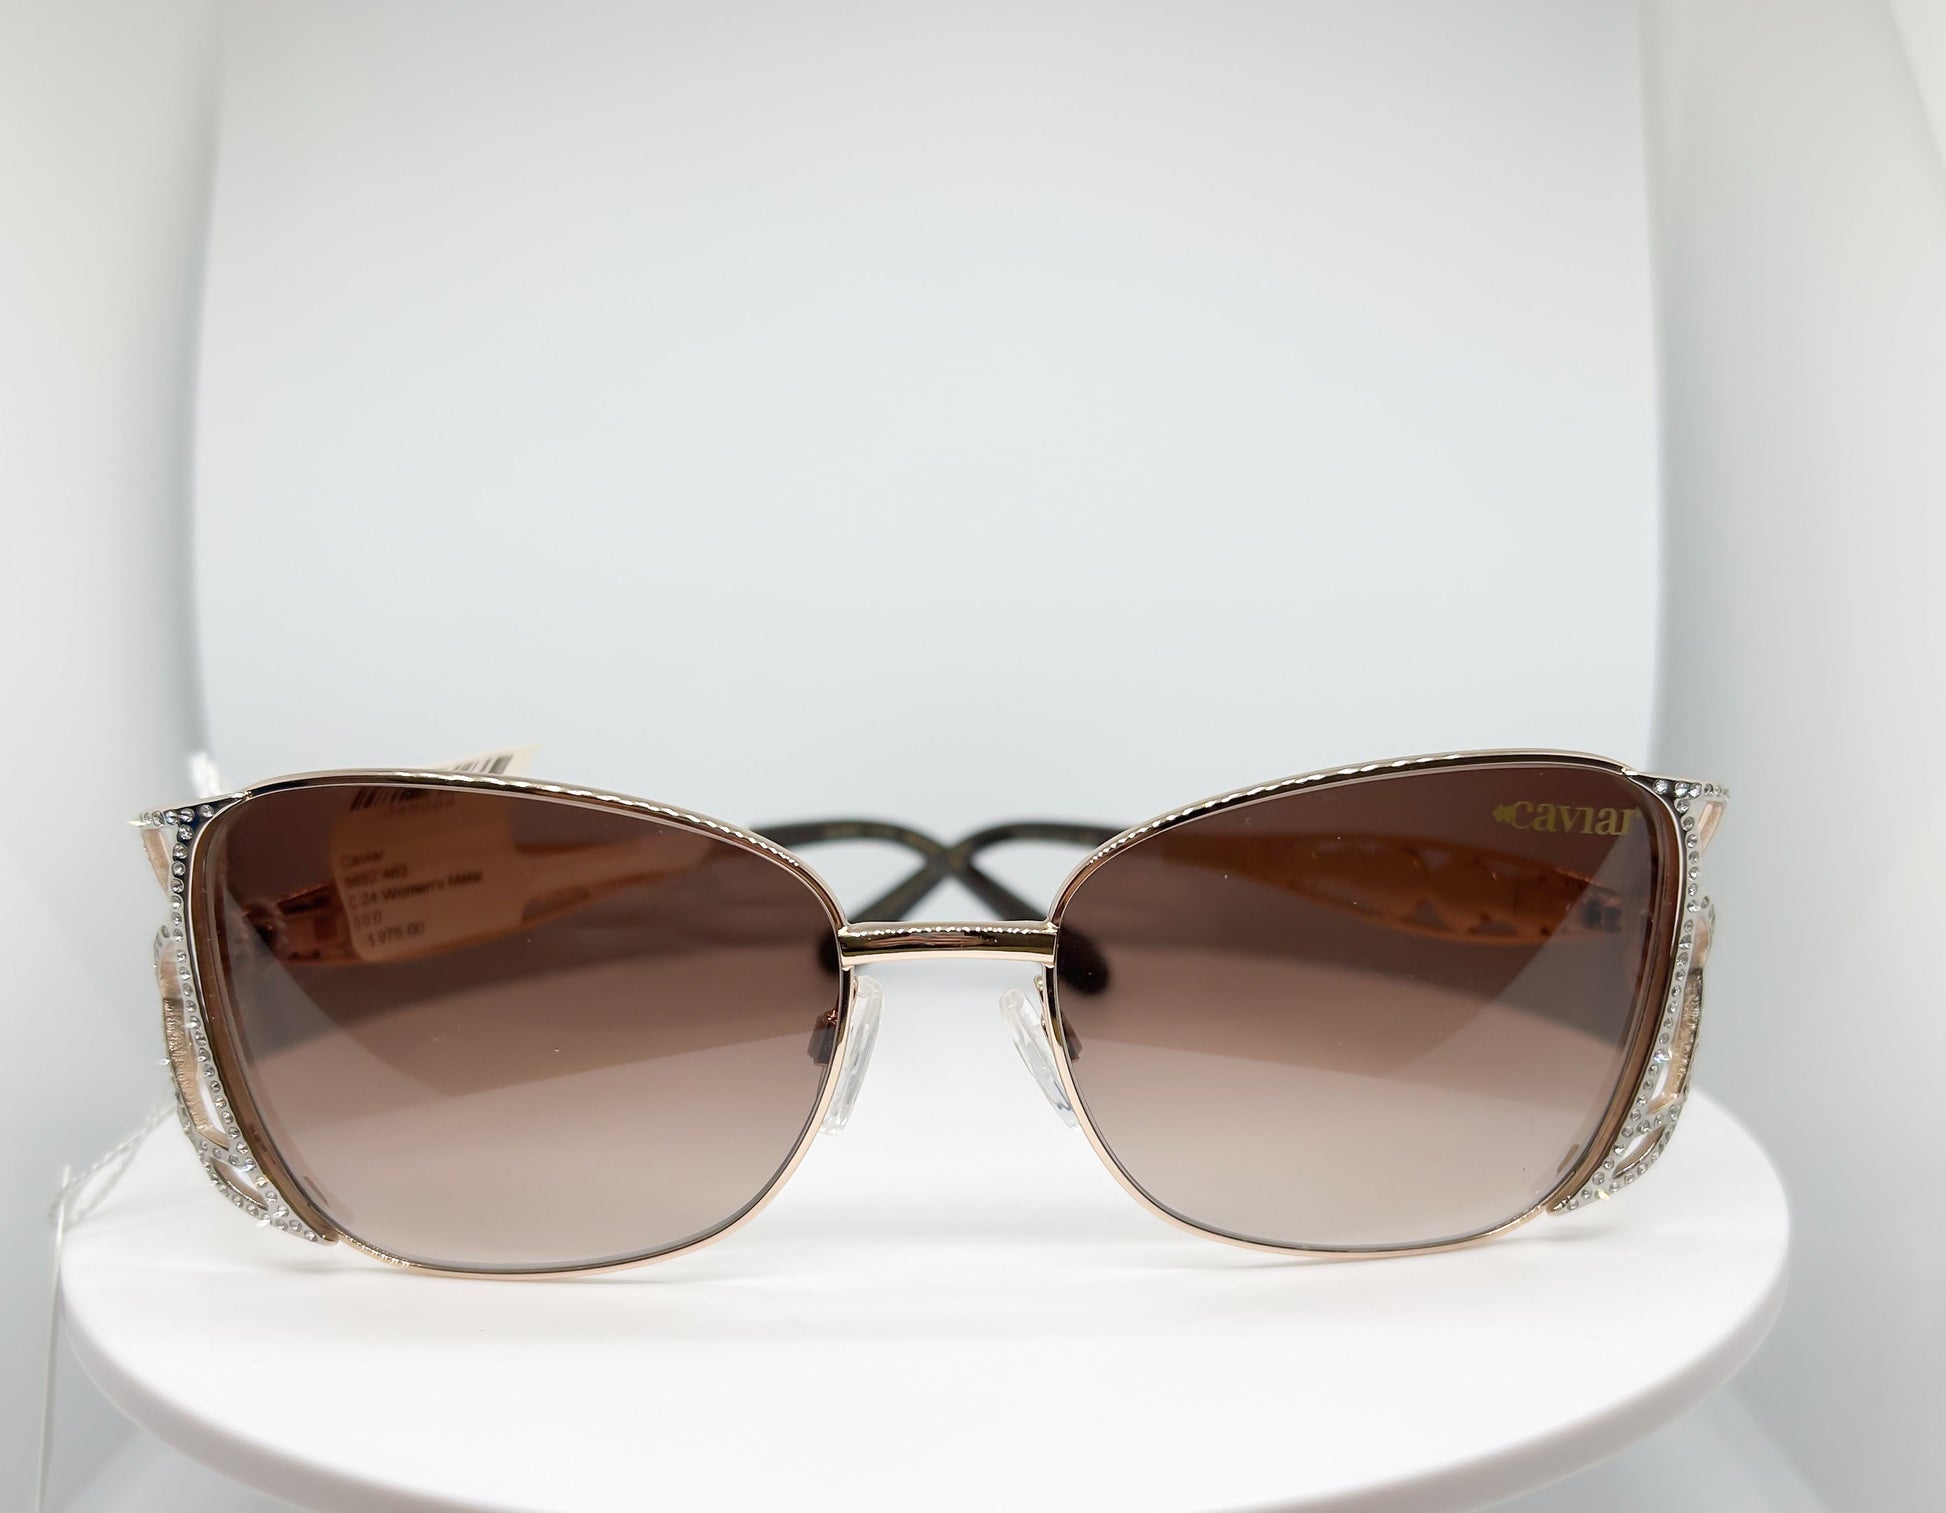 Buy Caviar 5652, a  Brown, Gold; Metal Sunglasses Frame with a Avant Garde shape. Adair Eyewear - 40+ Years History